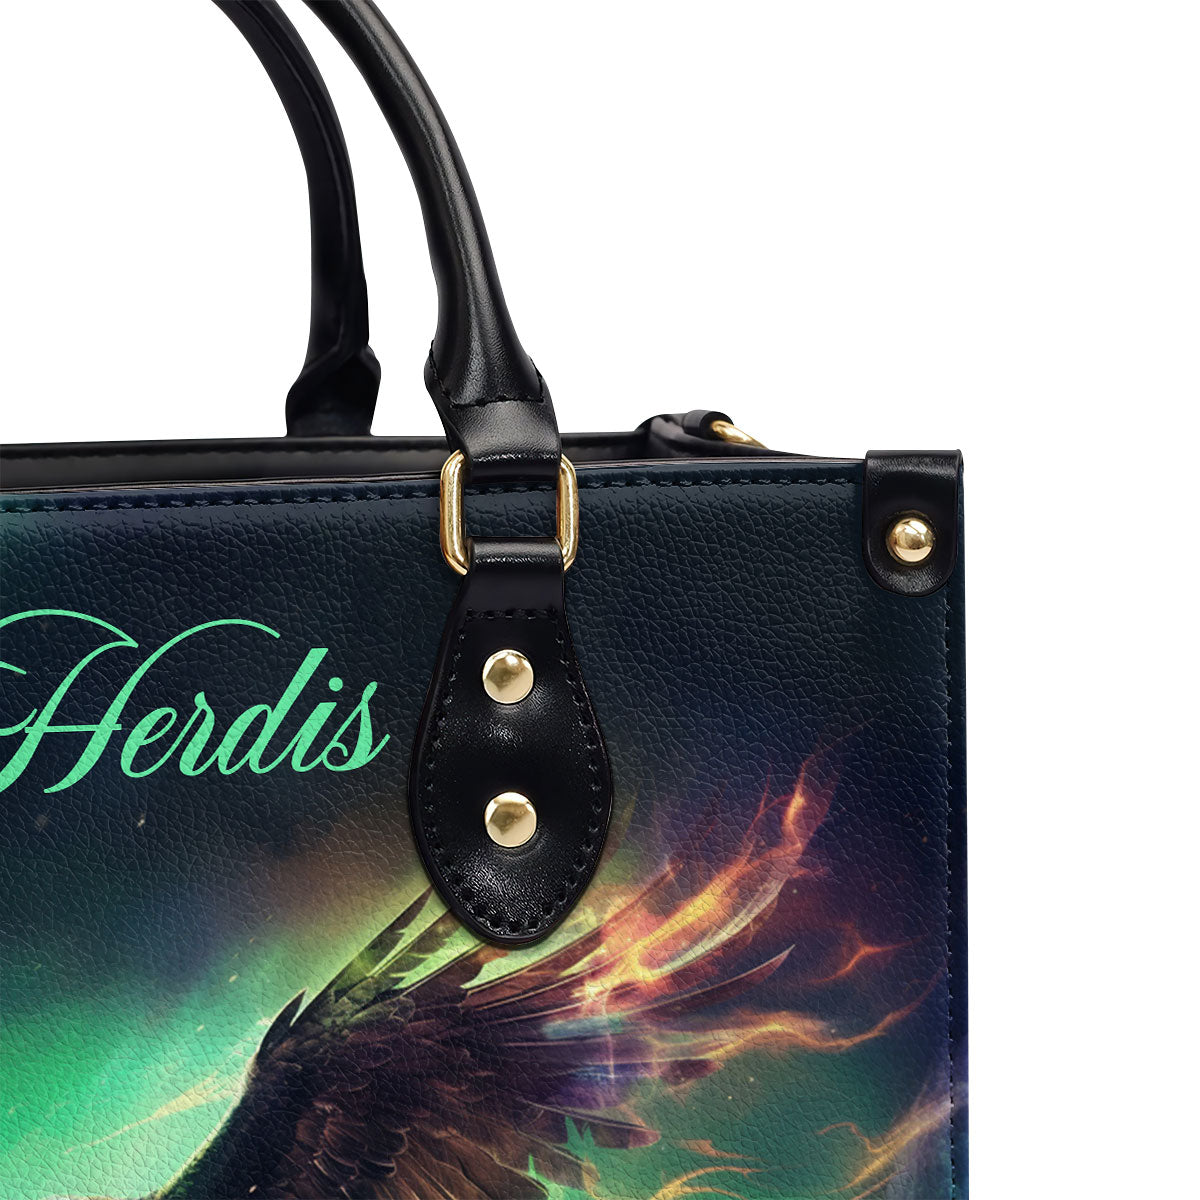 Eagle - Personalized Leather Handbag MS-H61